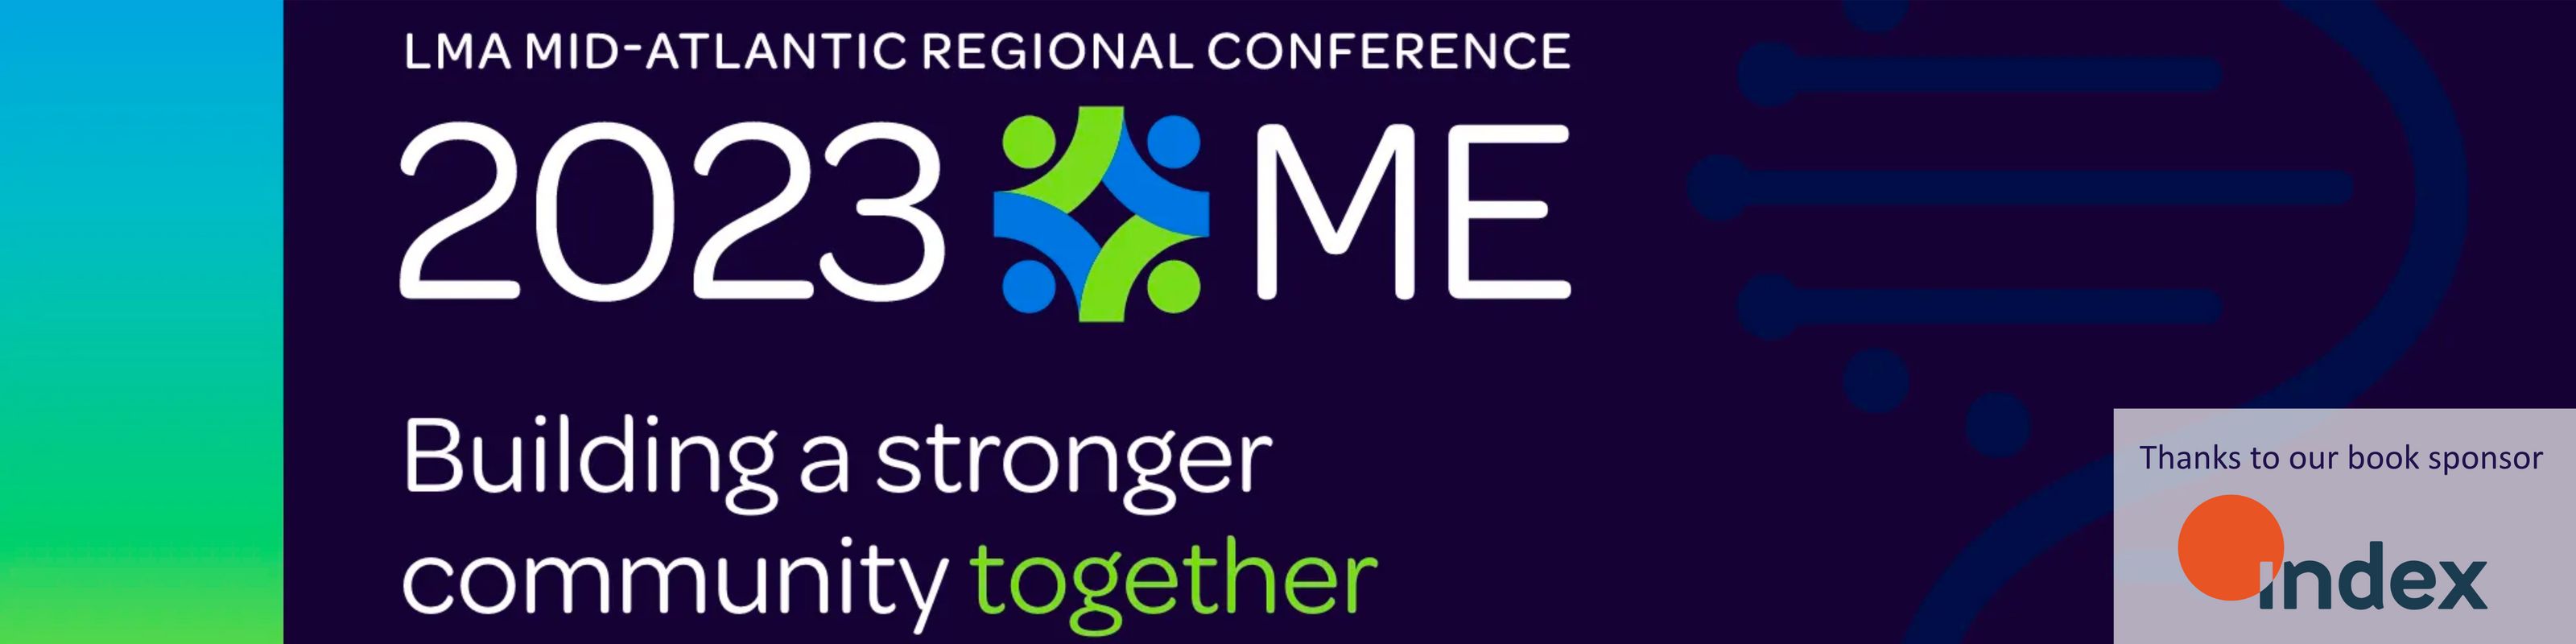 2023 Mid-Atlantic Regional Conference